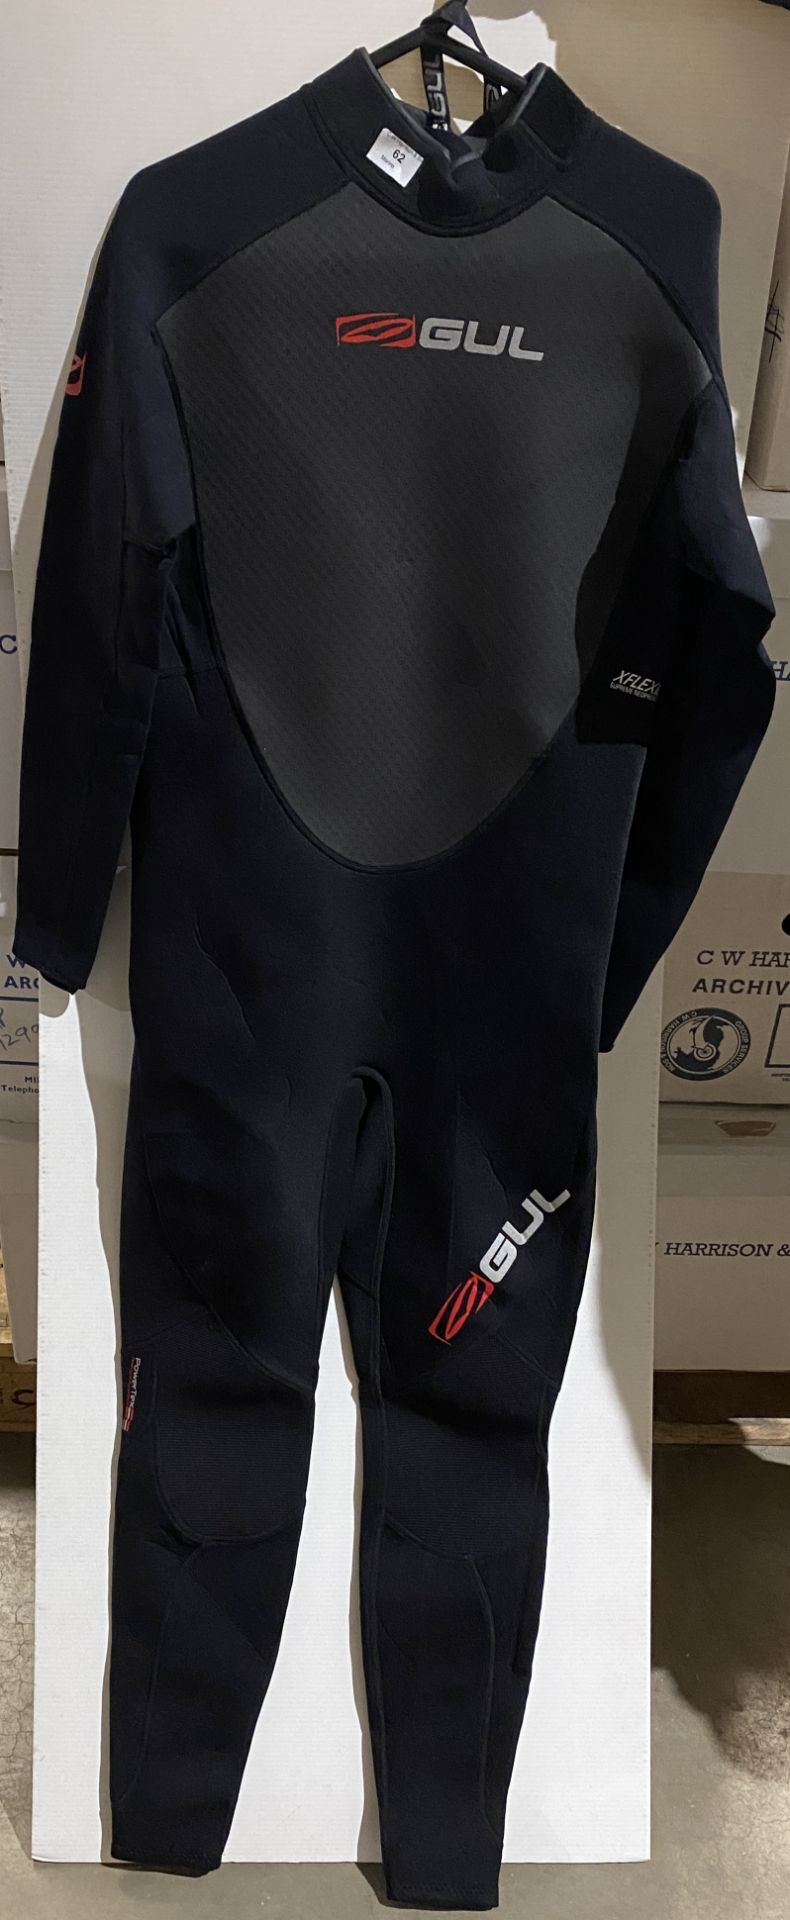 GUL Response 32 SDL FL T2 Steamer wetsuit - Size XL - (Saleroom Location G04)